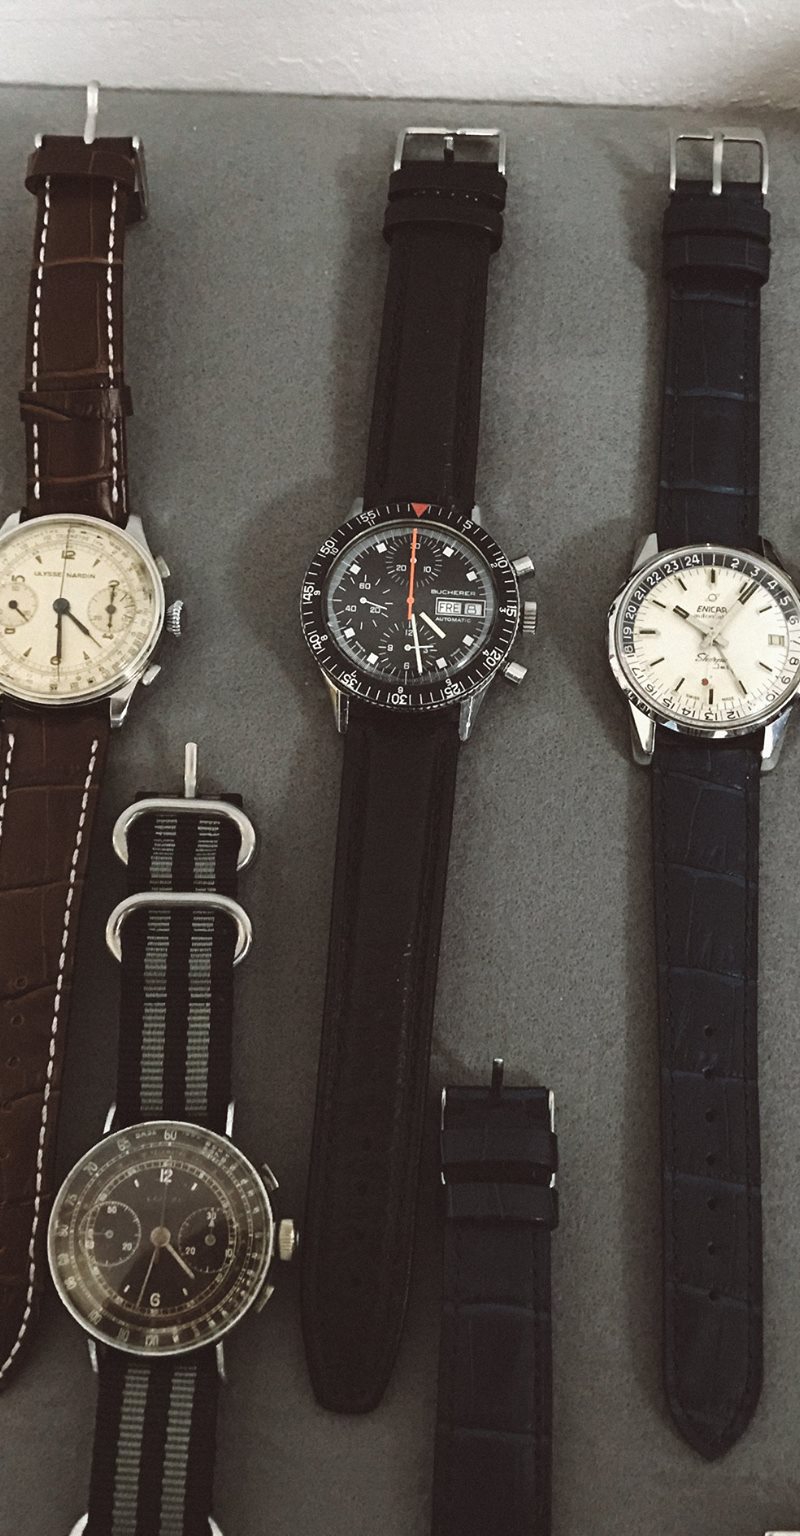 Stare Zegarki / Vintage Watches – Smardzewice 2017